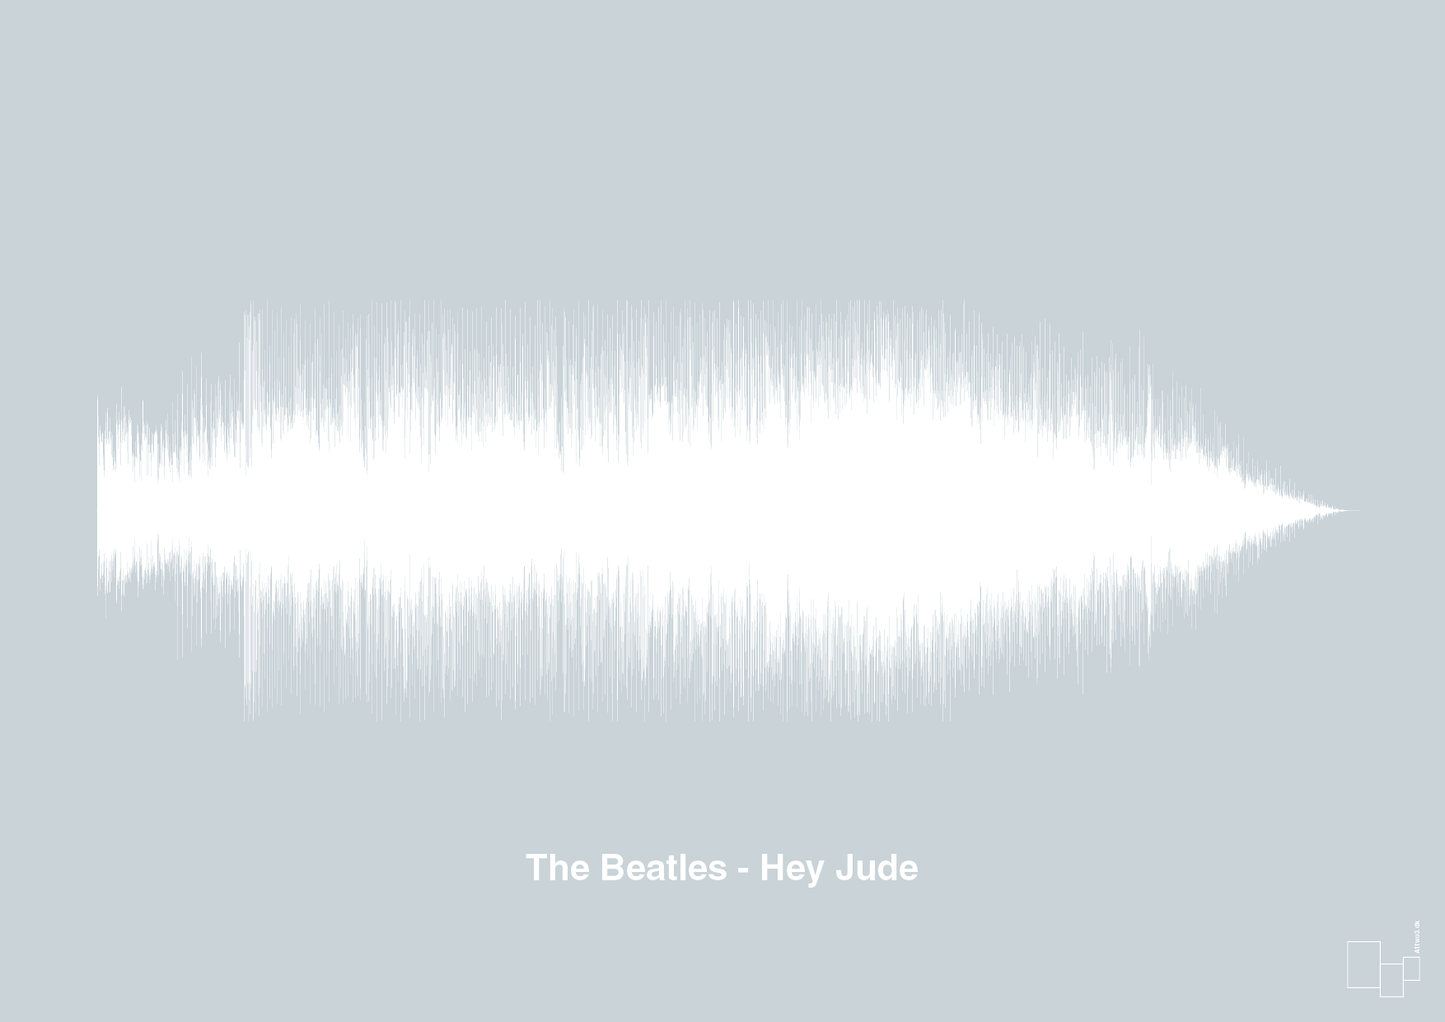 the beatles - hey jude - Plakat med Musik i Light Drizzle